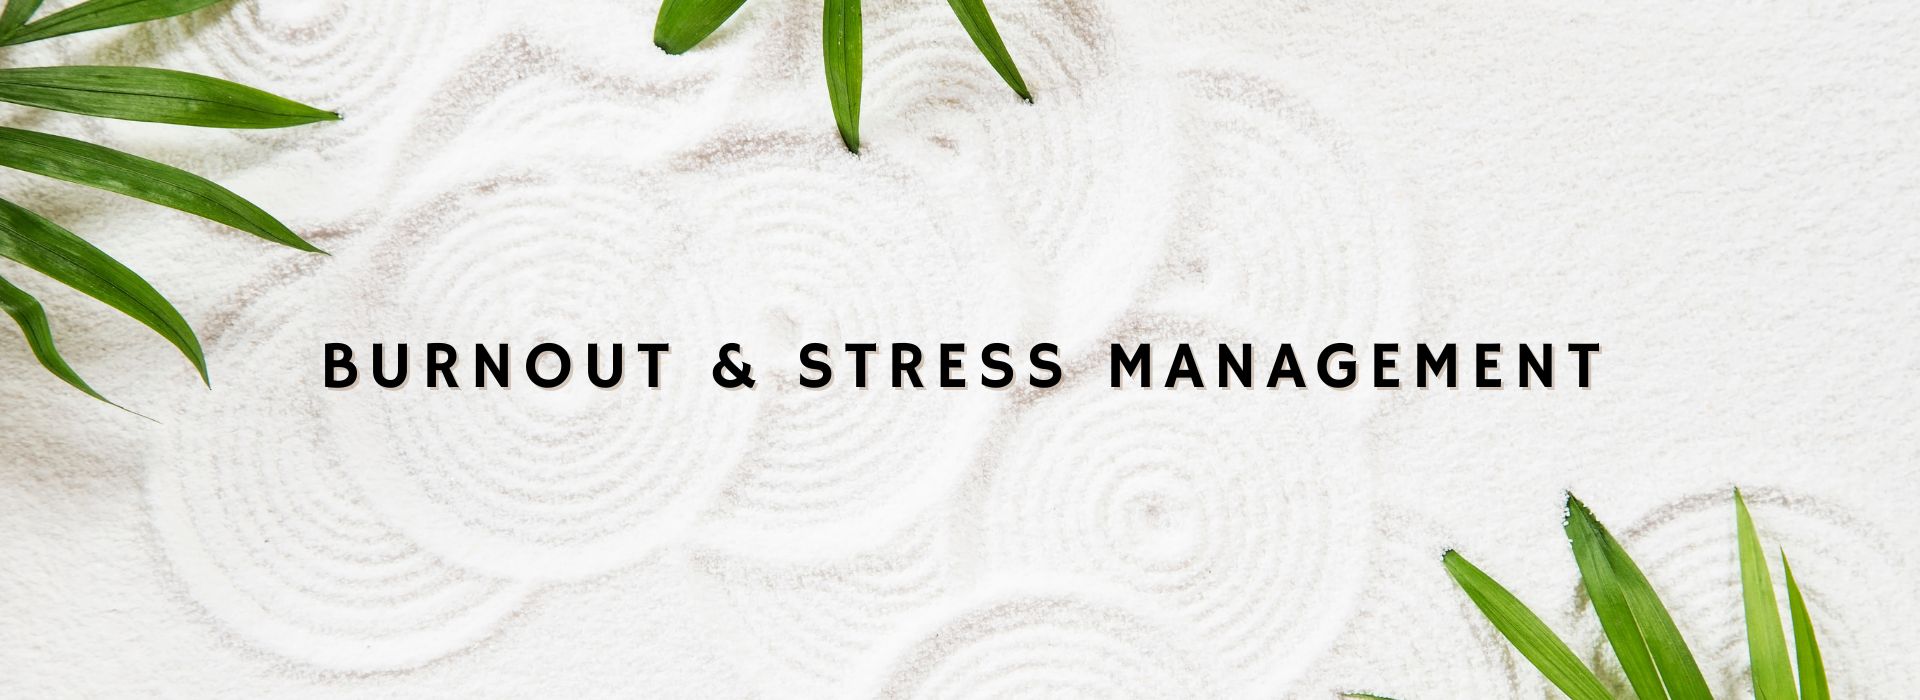 burnout workshop and stress management title picture 